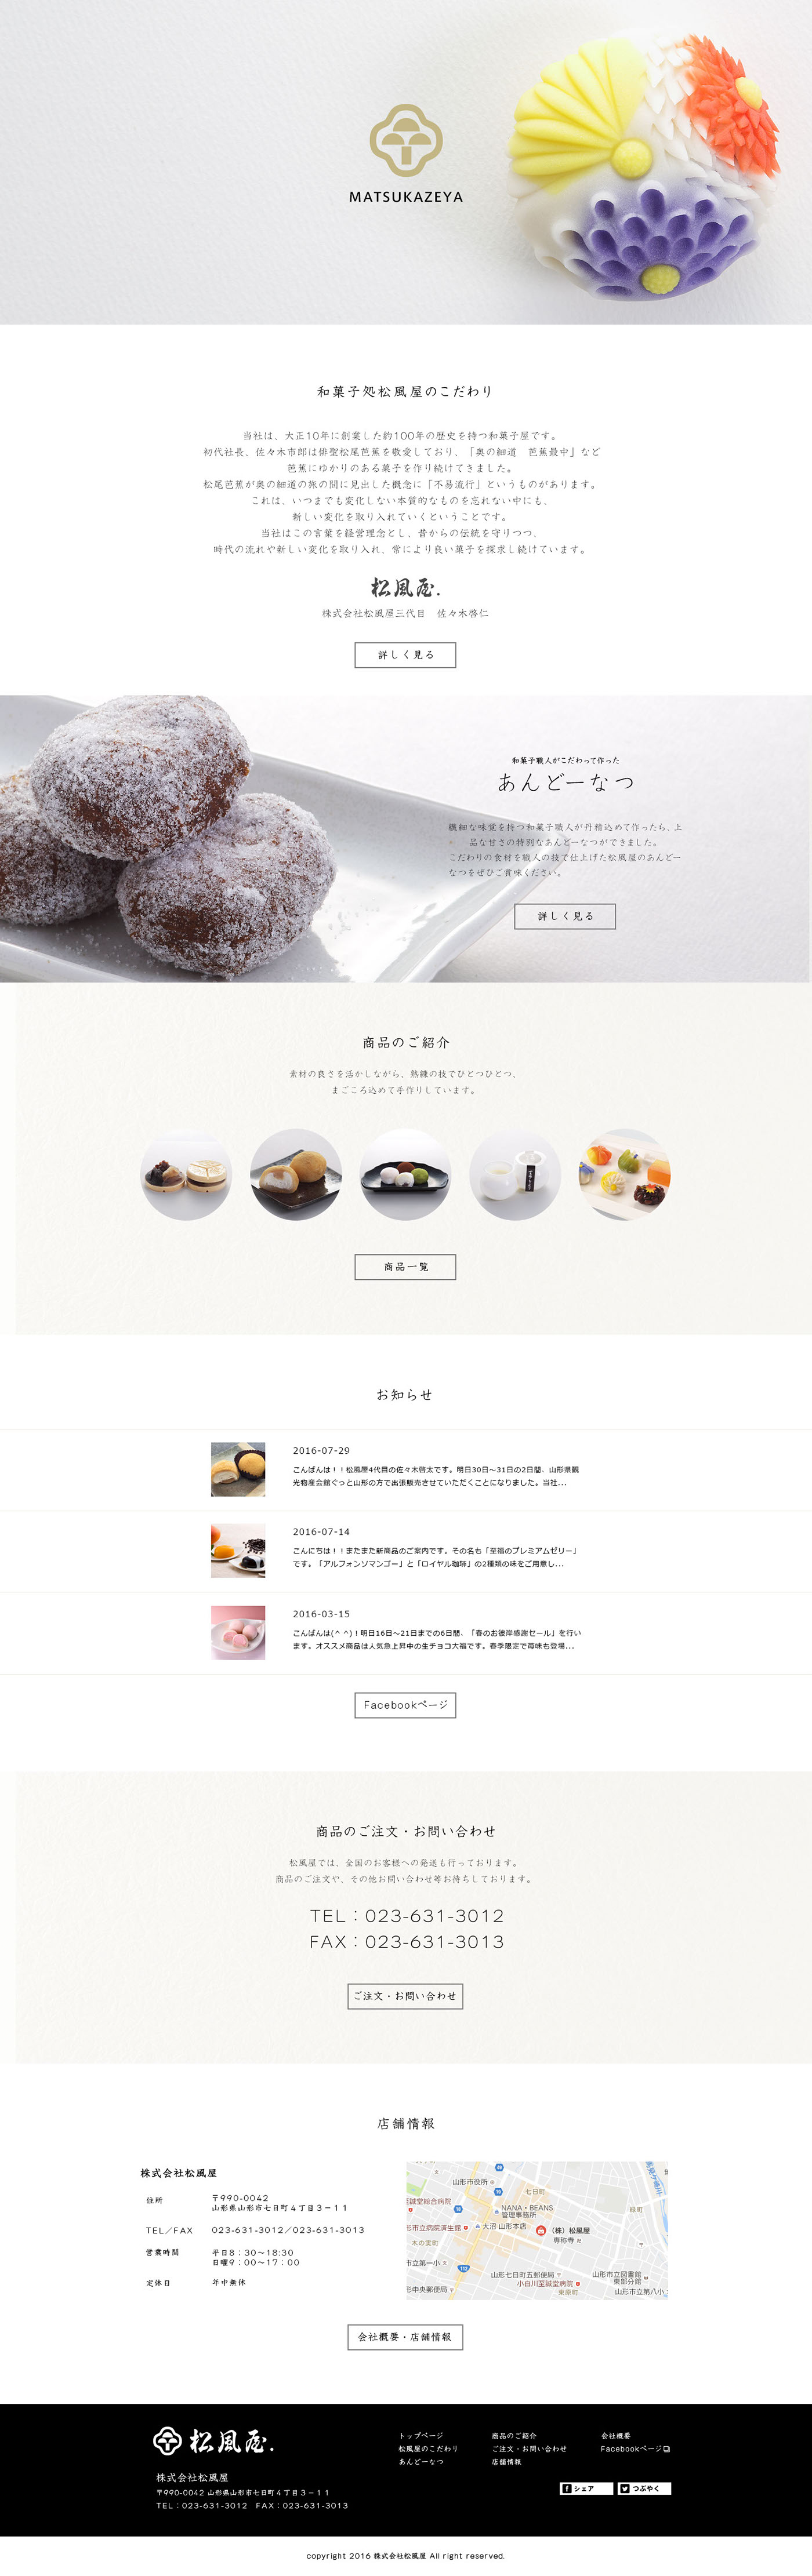 japan cofection japanese cake shop Web souvenir wagashi